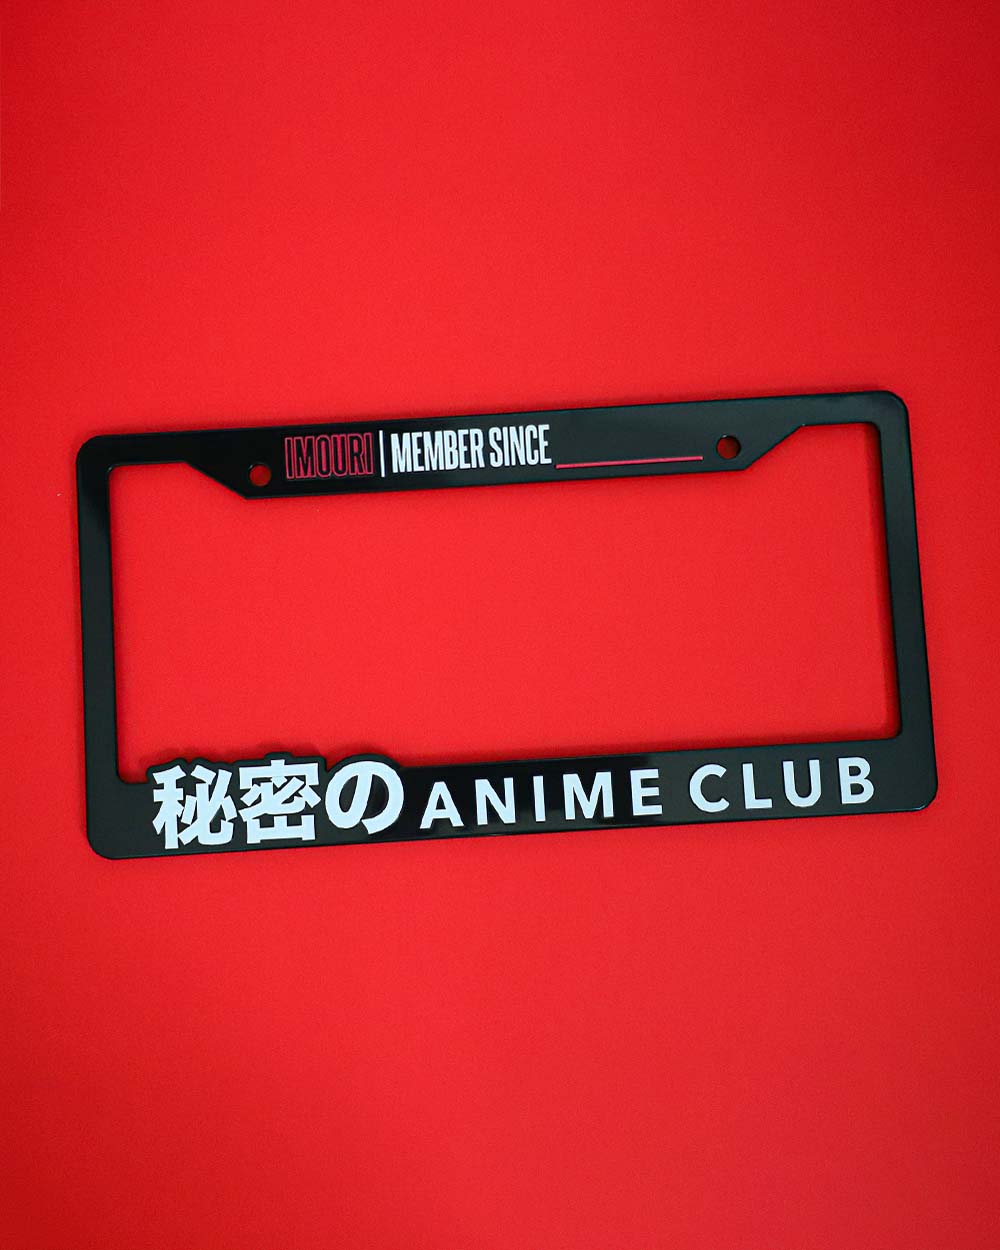 Secret Anime Club License Plate Frame